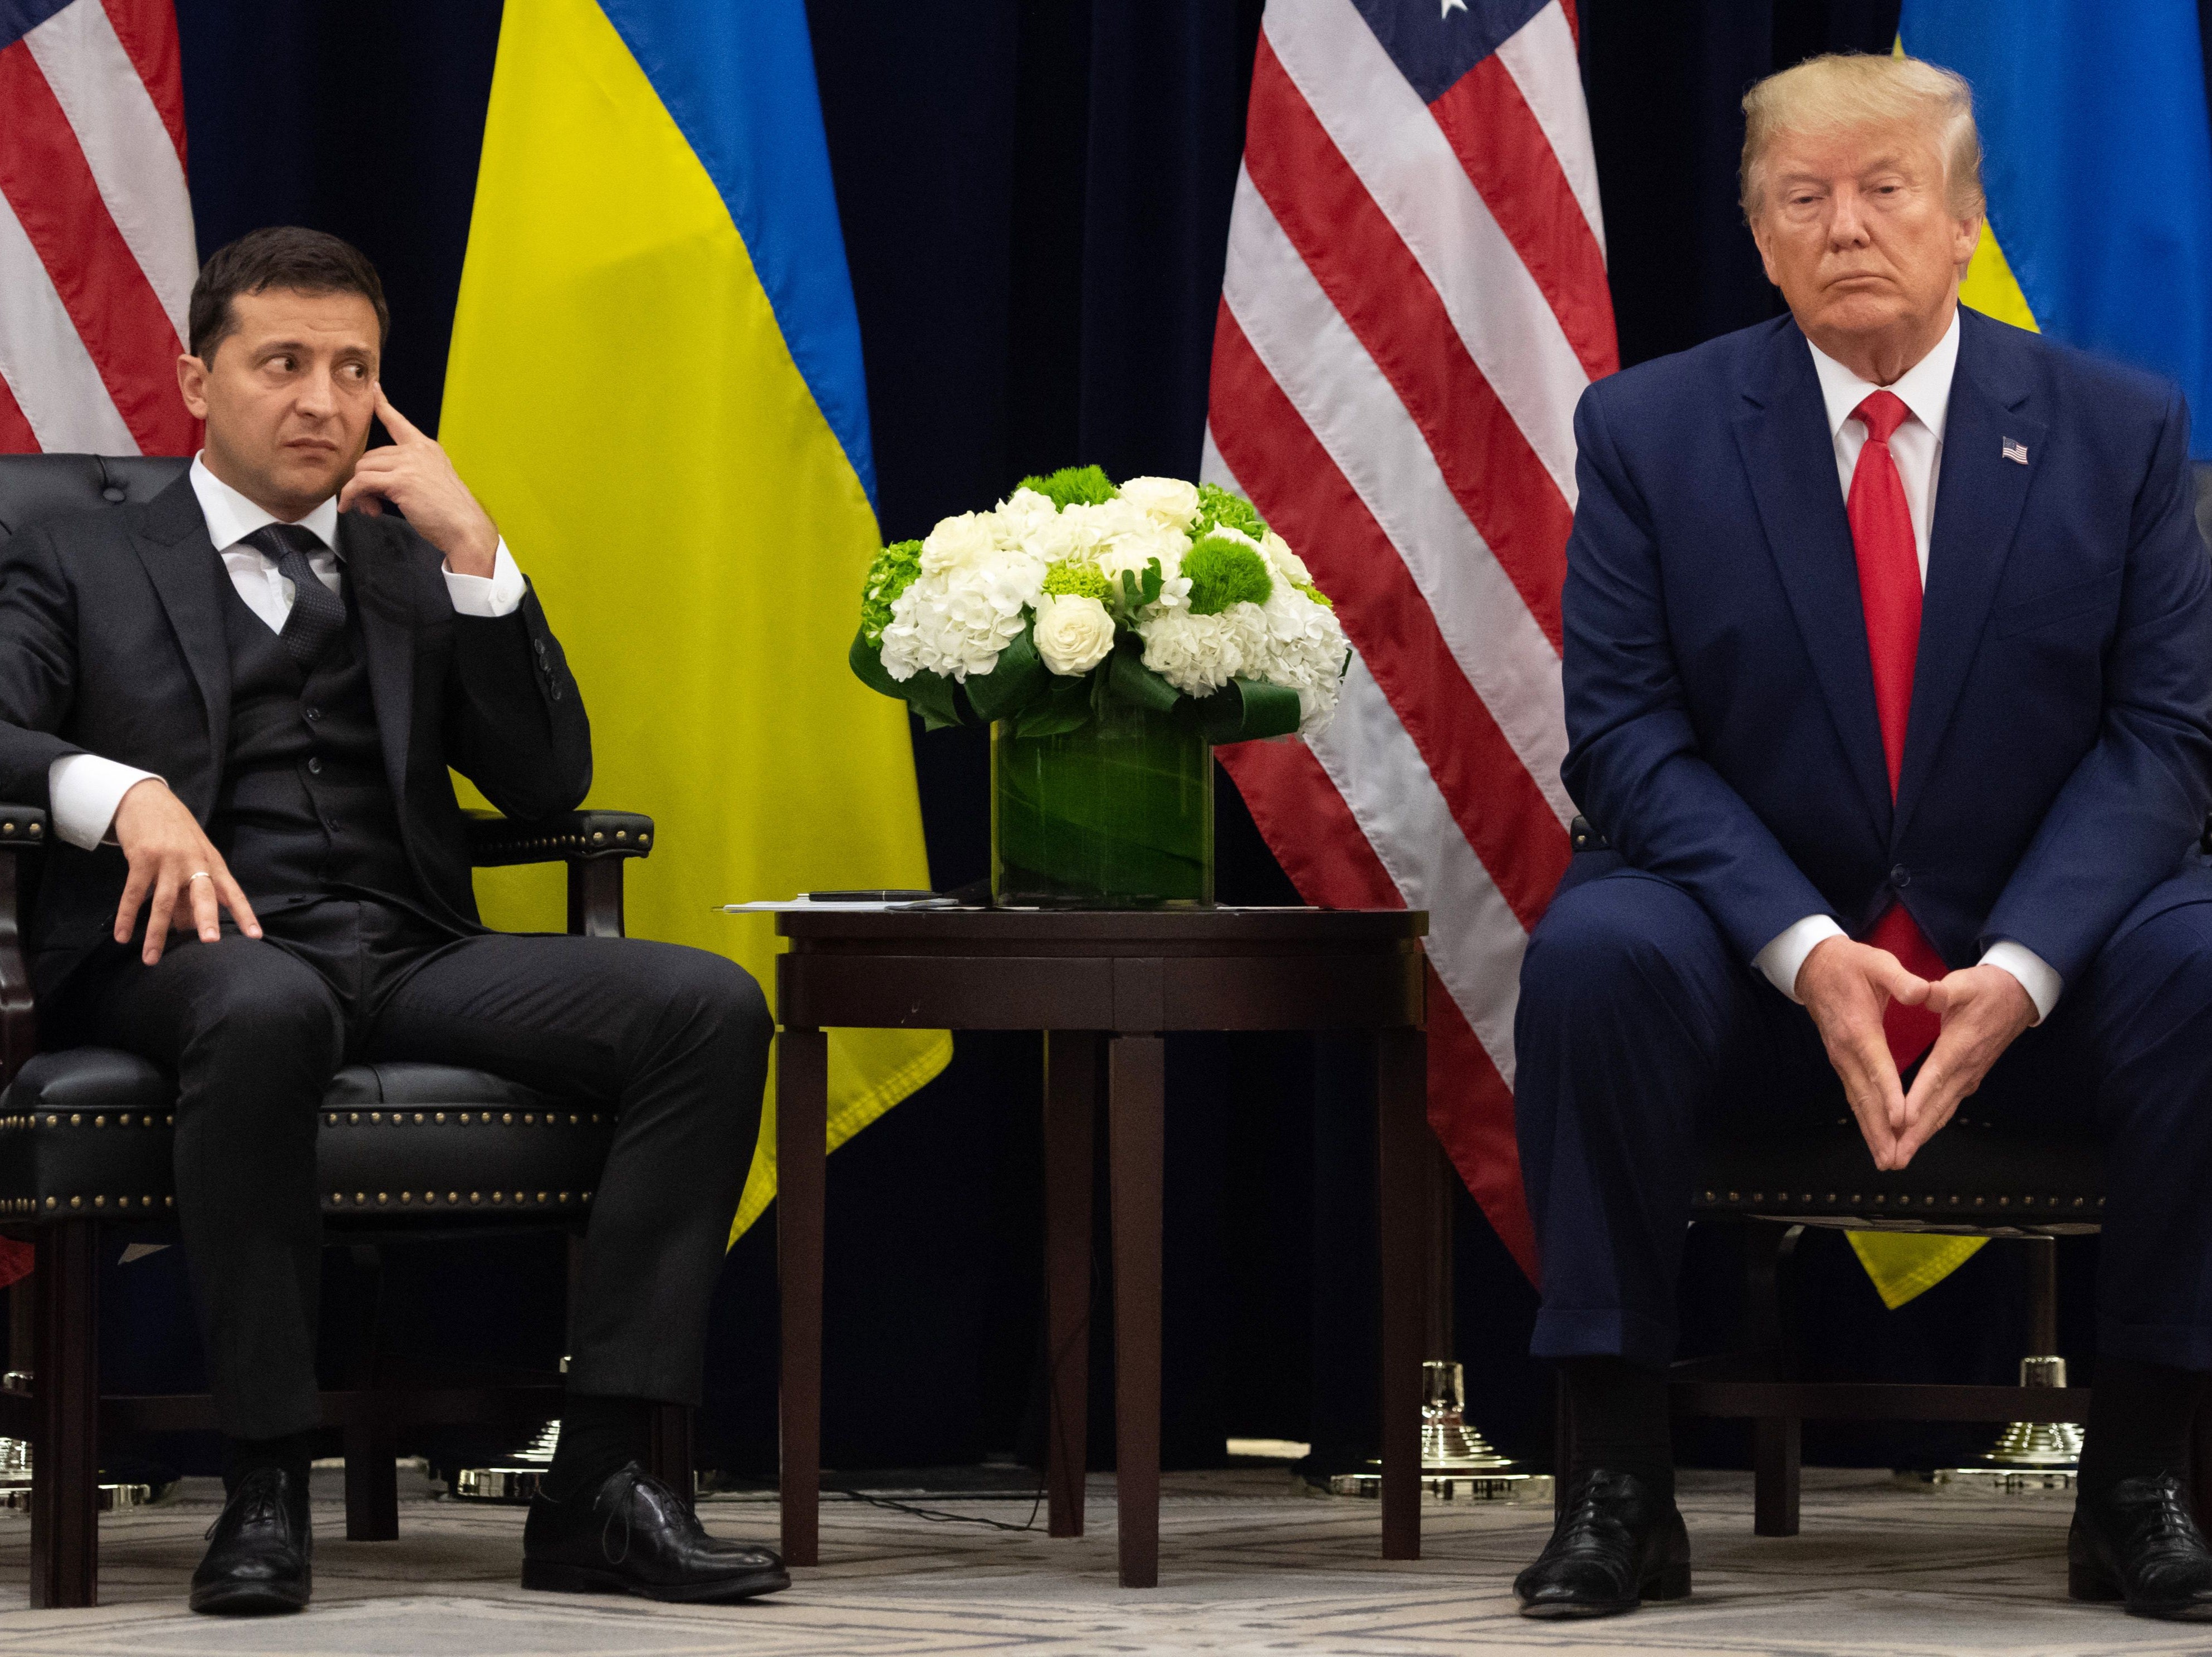 President Trump and Ukrainian President Volodymyr Zelensky during a meeting in New York, 25 September 2019